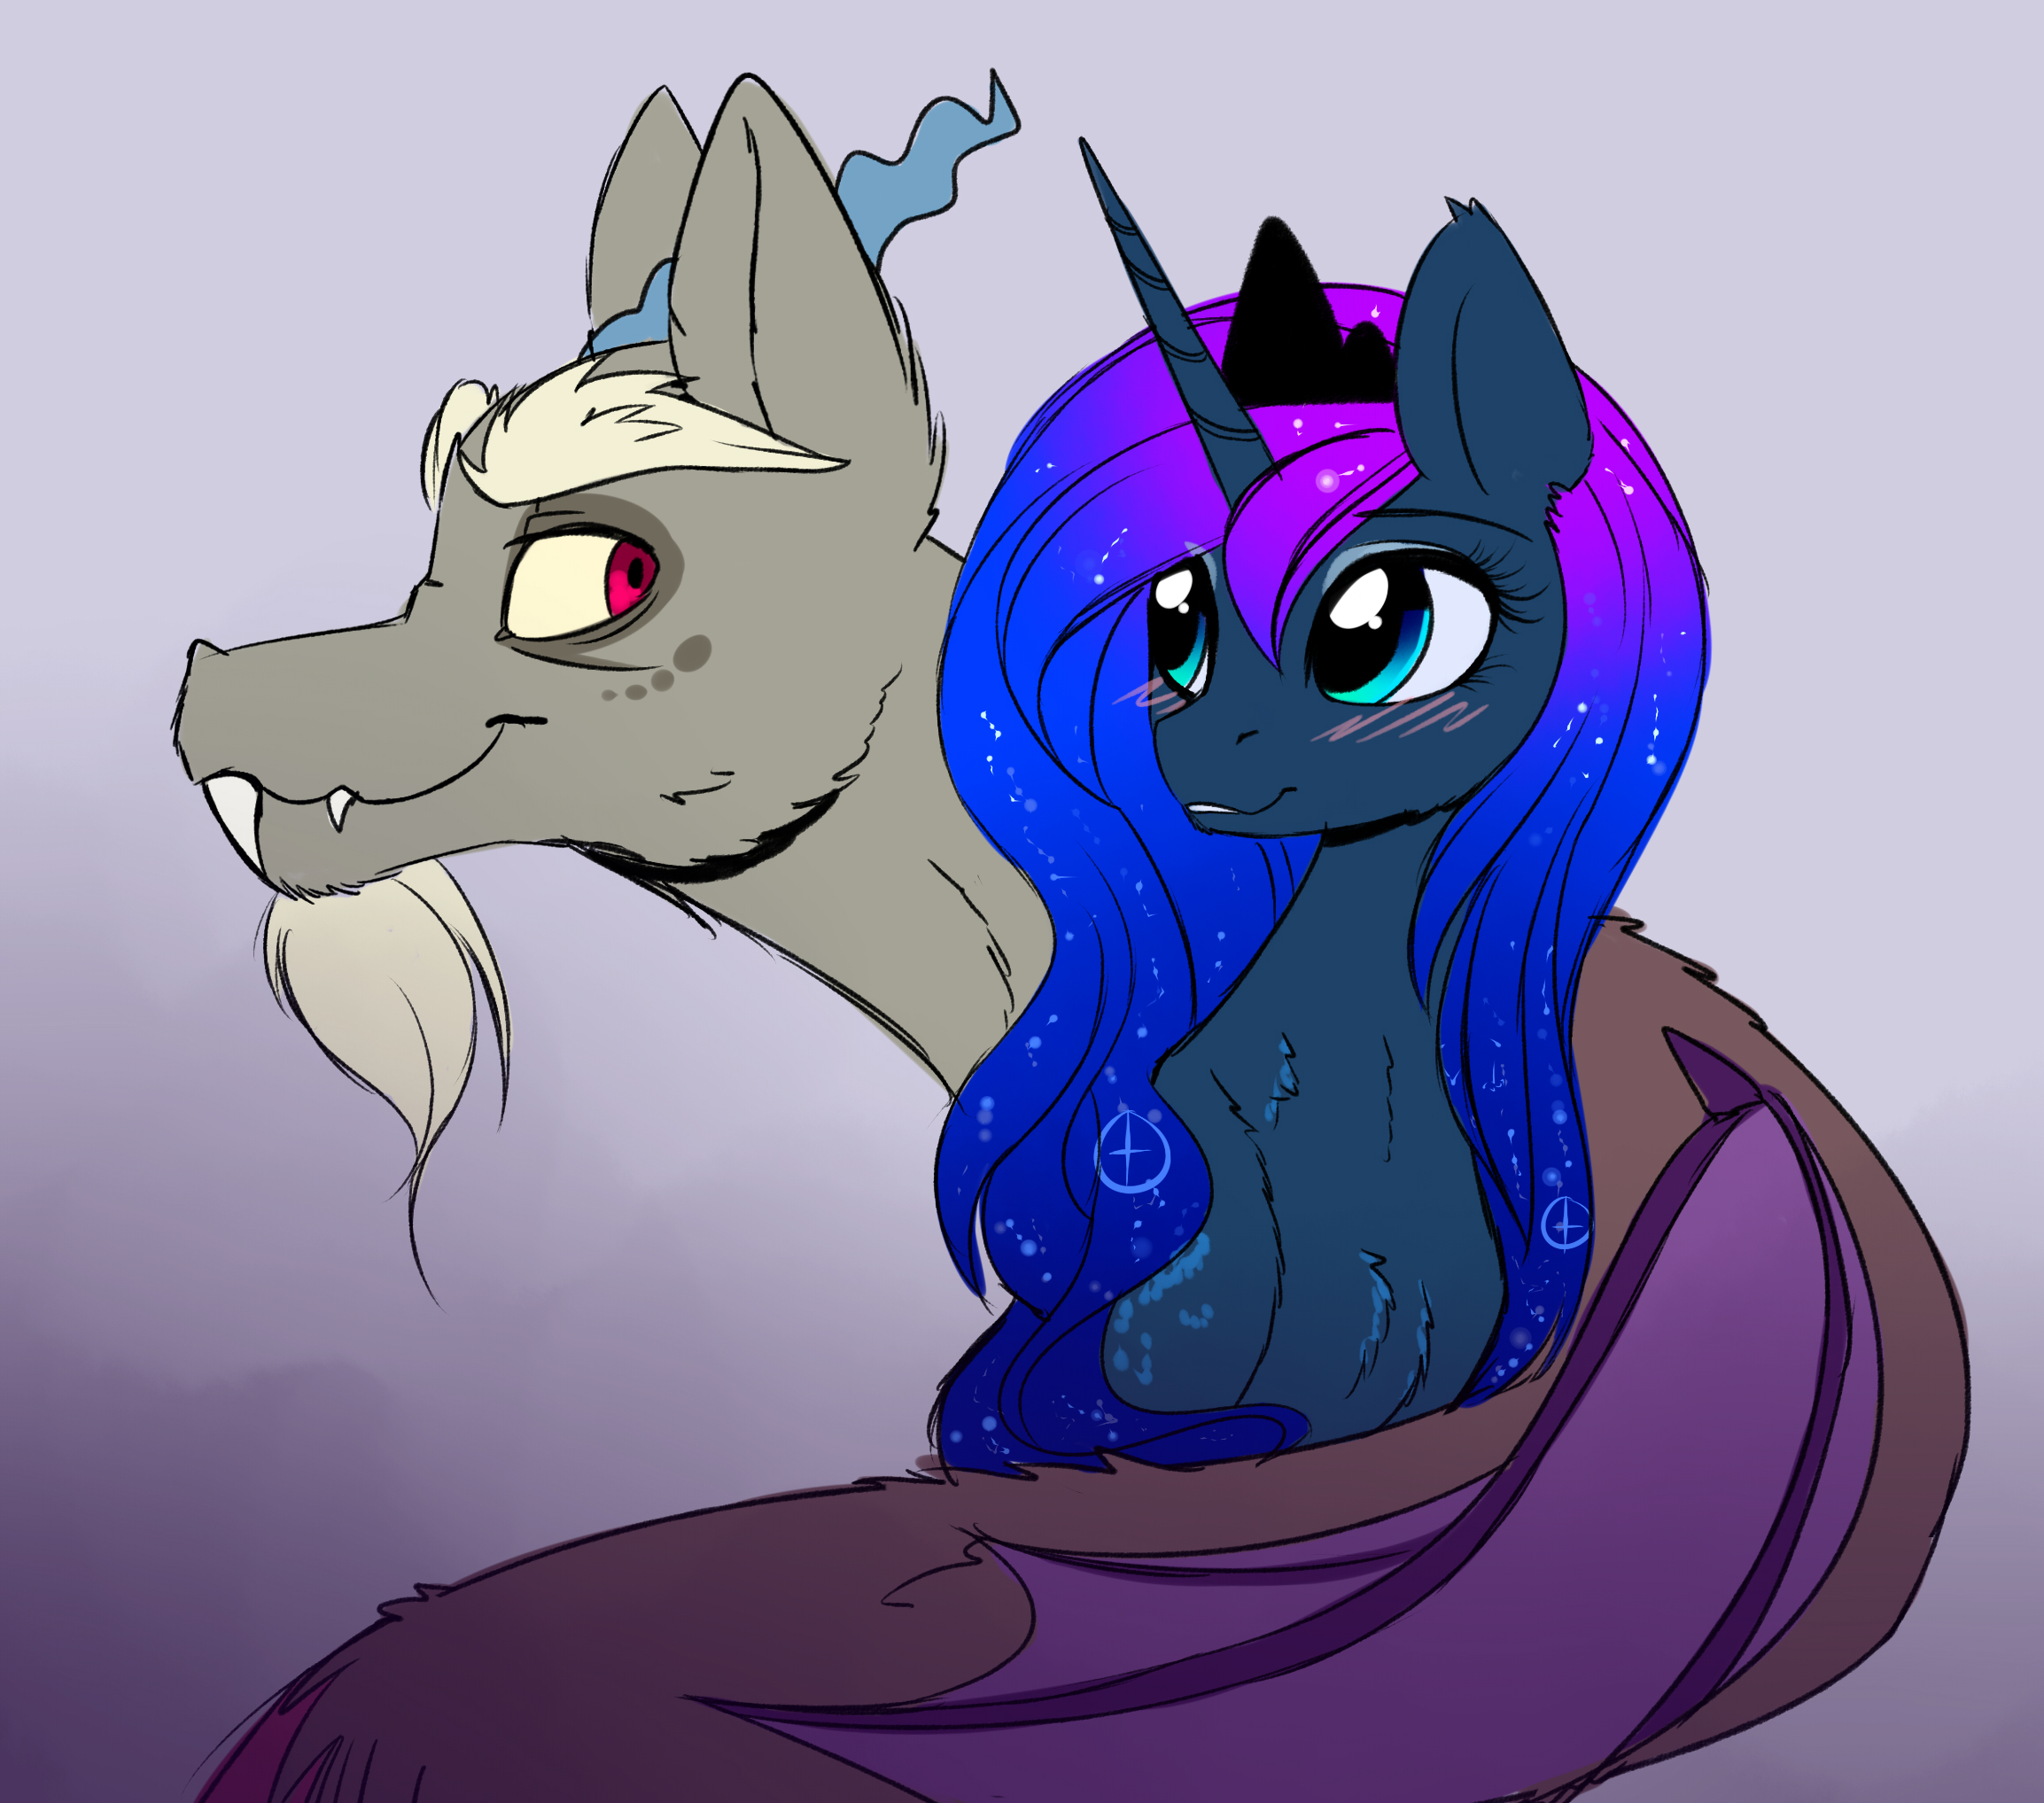 Discord pony. МЛП Луна и Дискорд арт. Princess Luna r63. Принцесса Луна и Дискорд арт. Лунная пони и Дискорд.